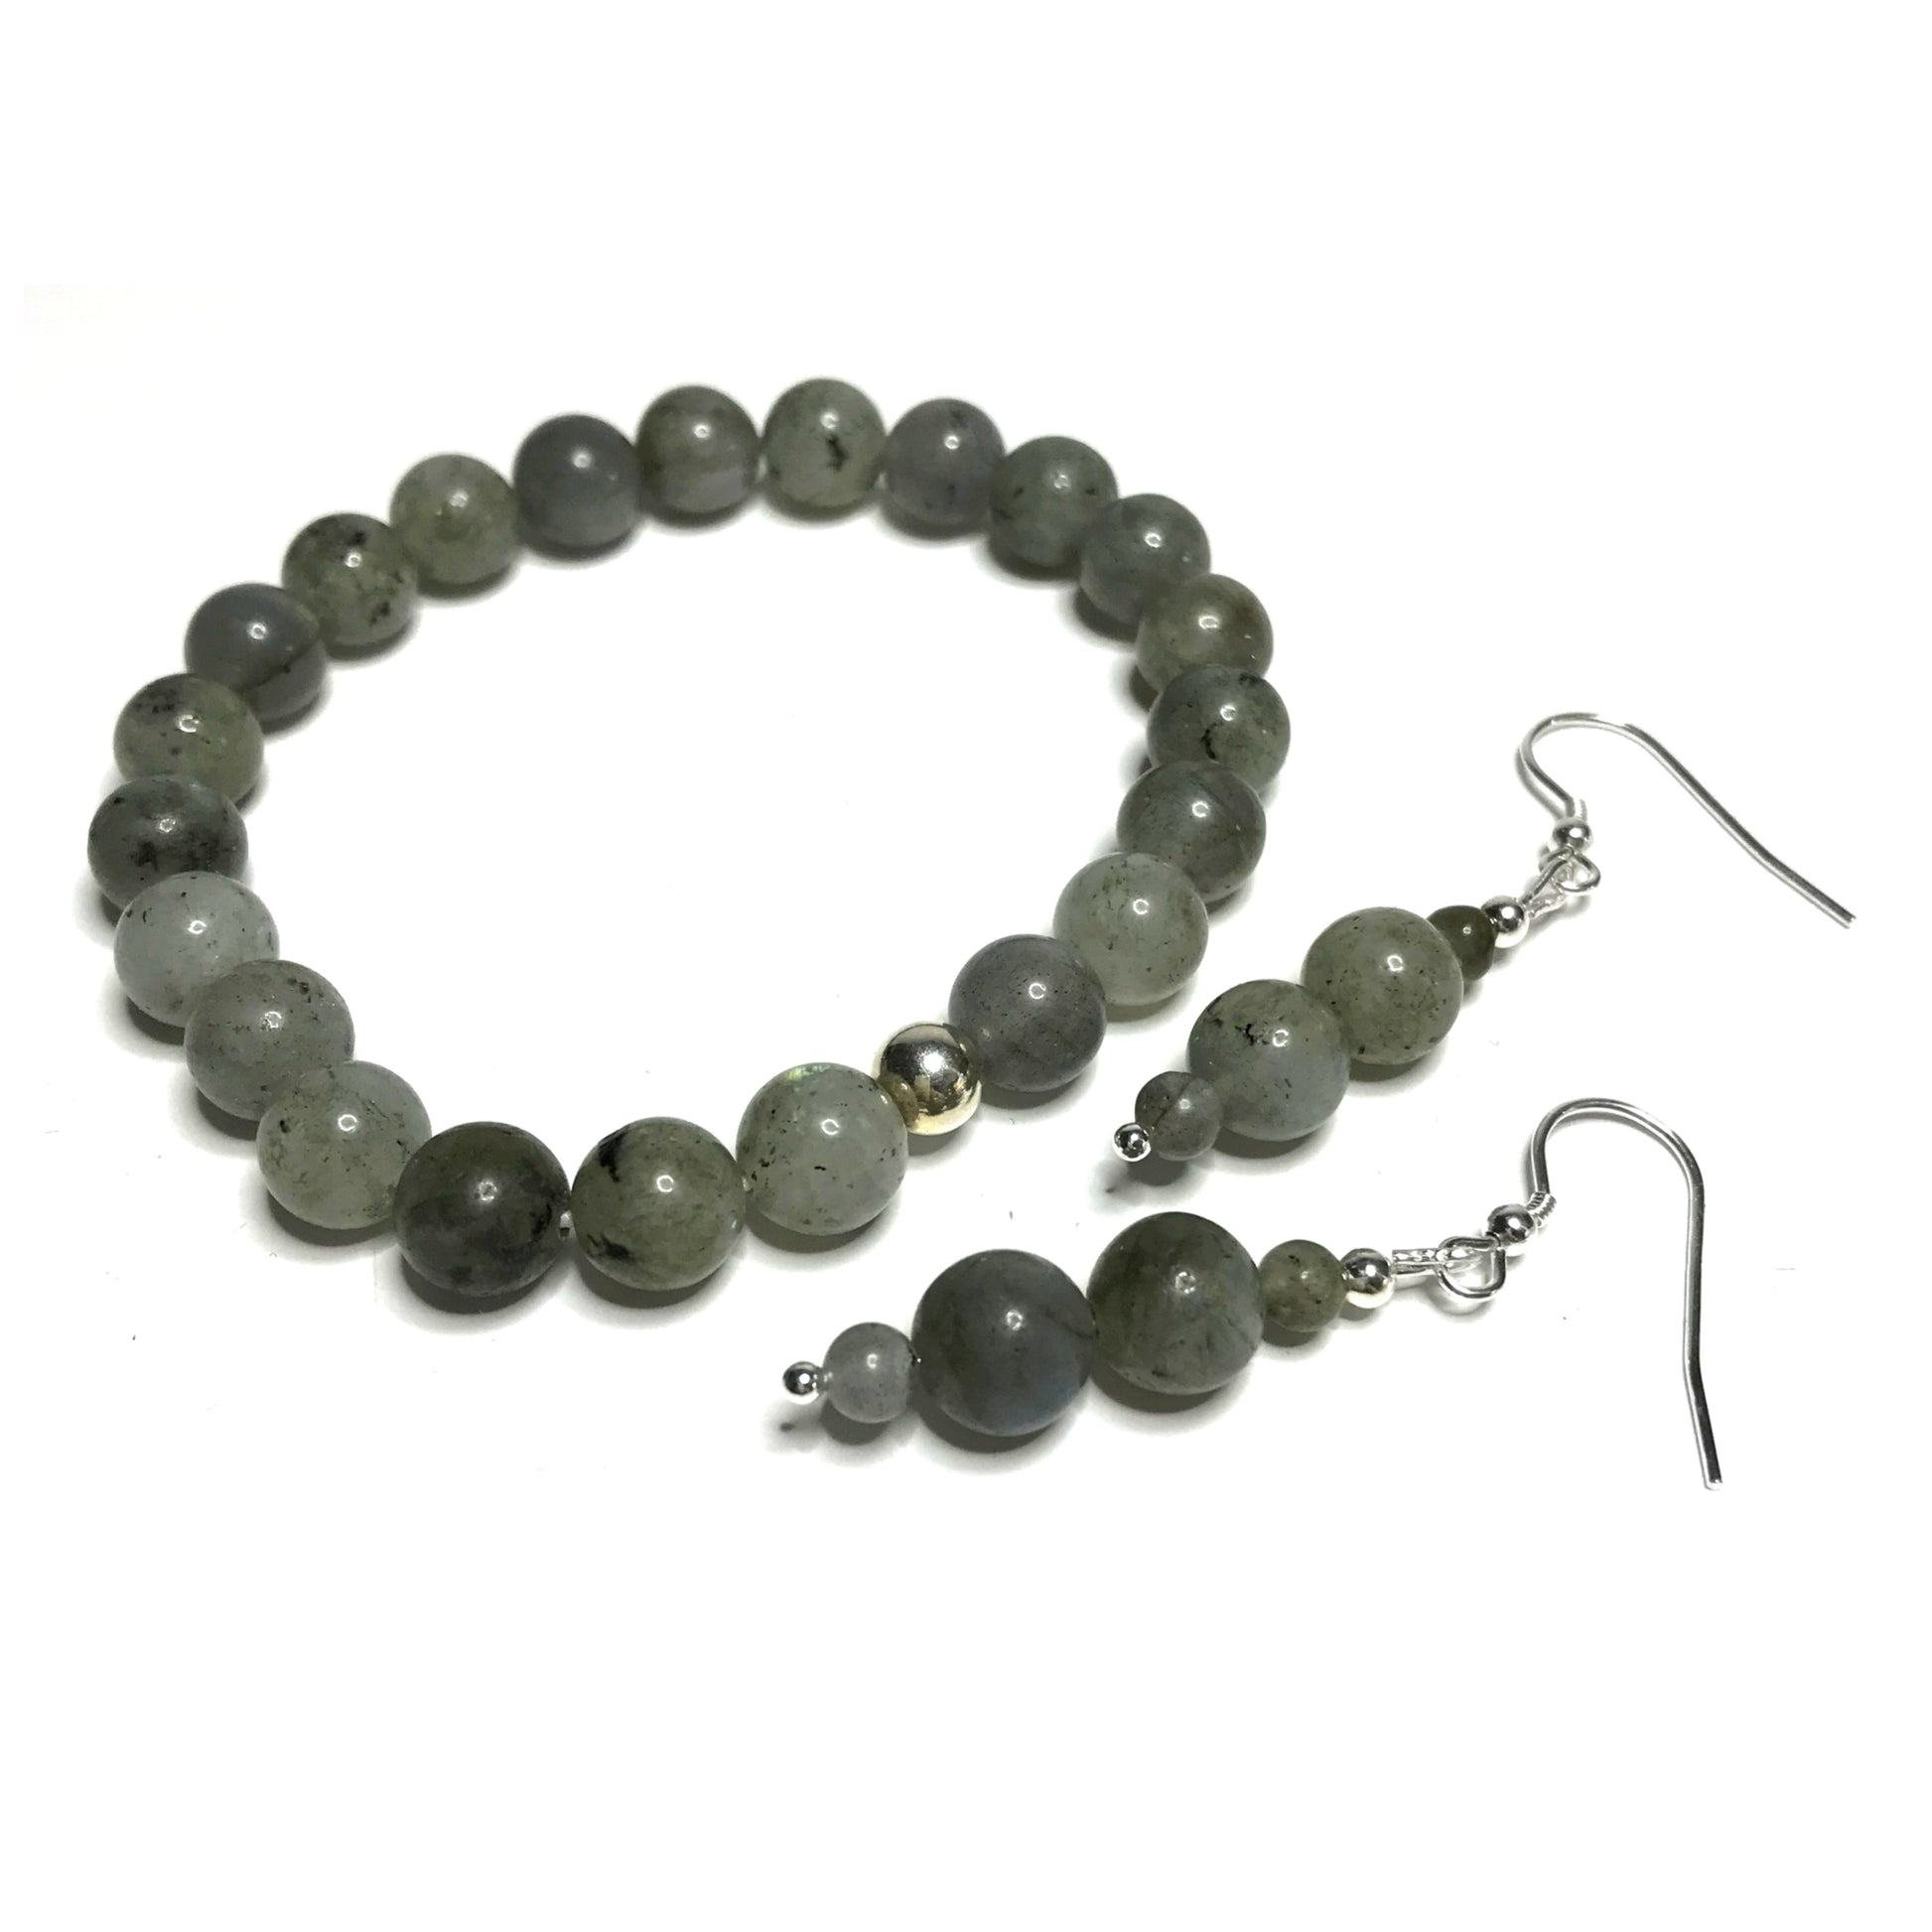 Labradorite bead bracelet with matching drop earrings